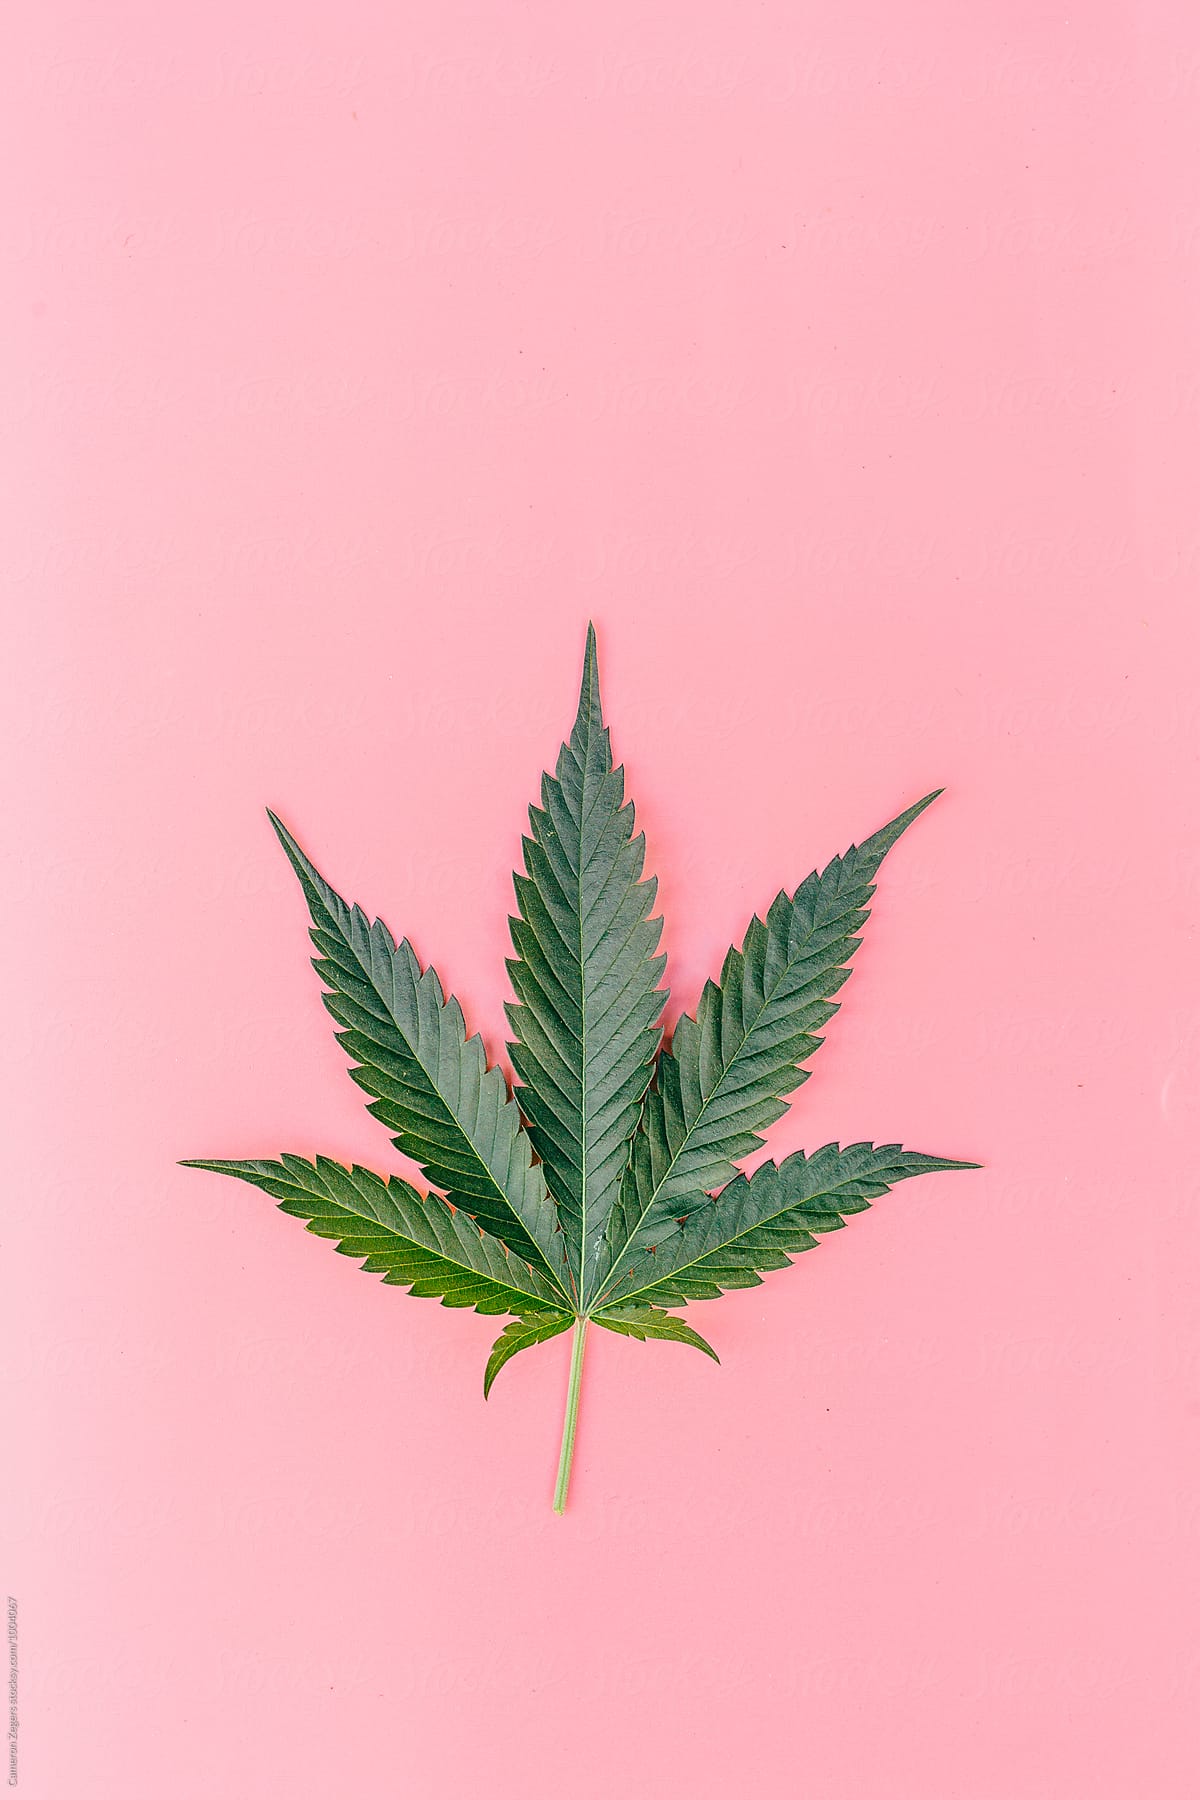 green marijuana leaf on pink background by Cameron Zegers ...